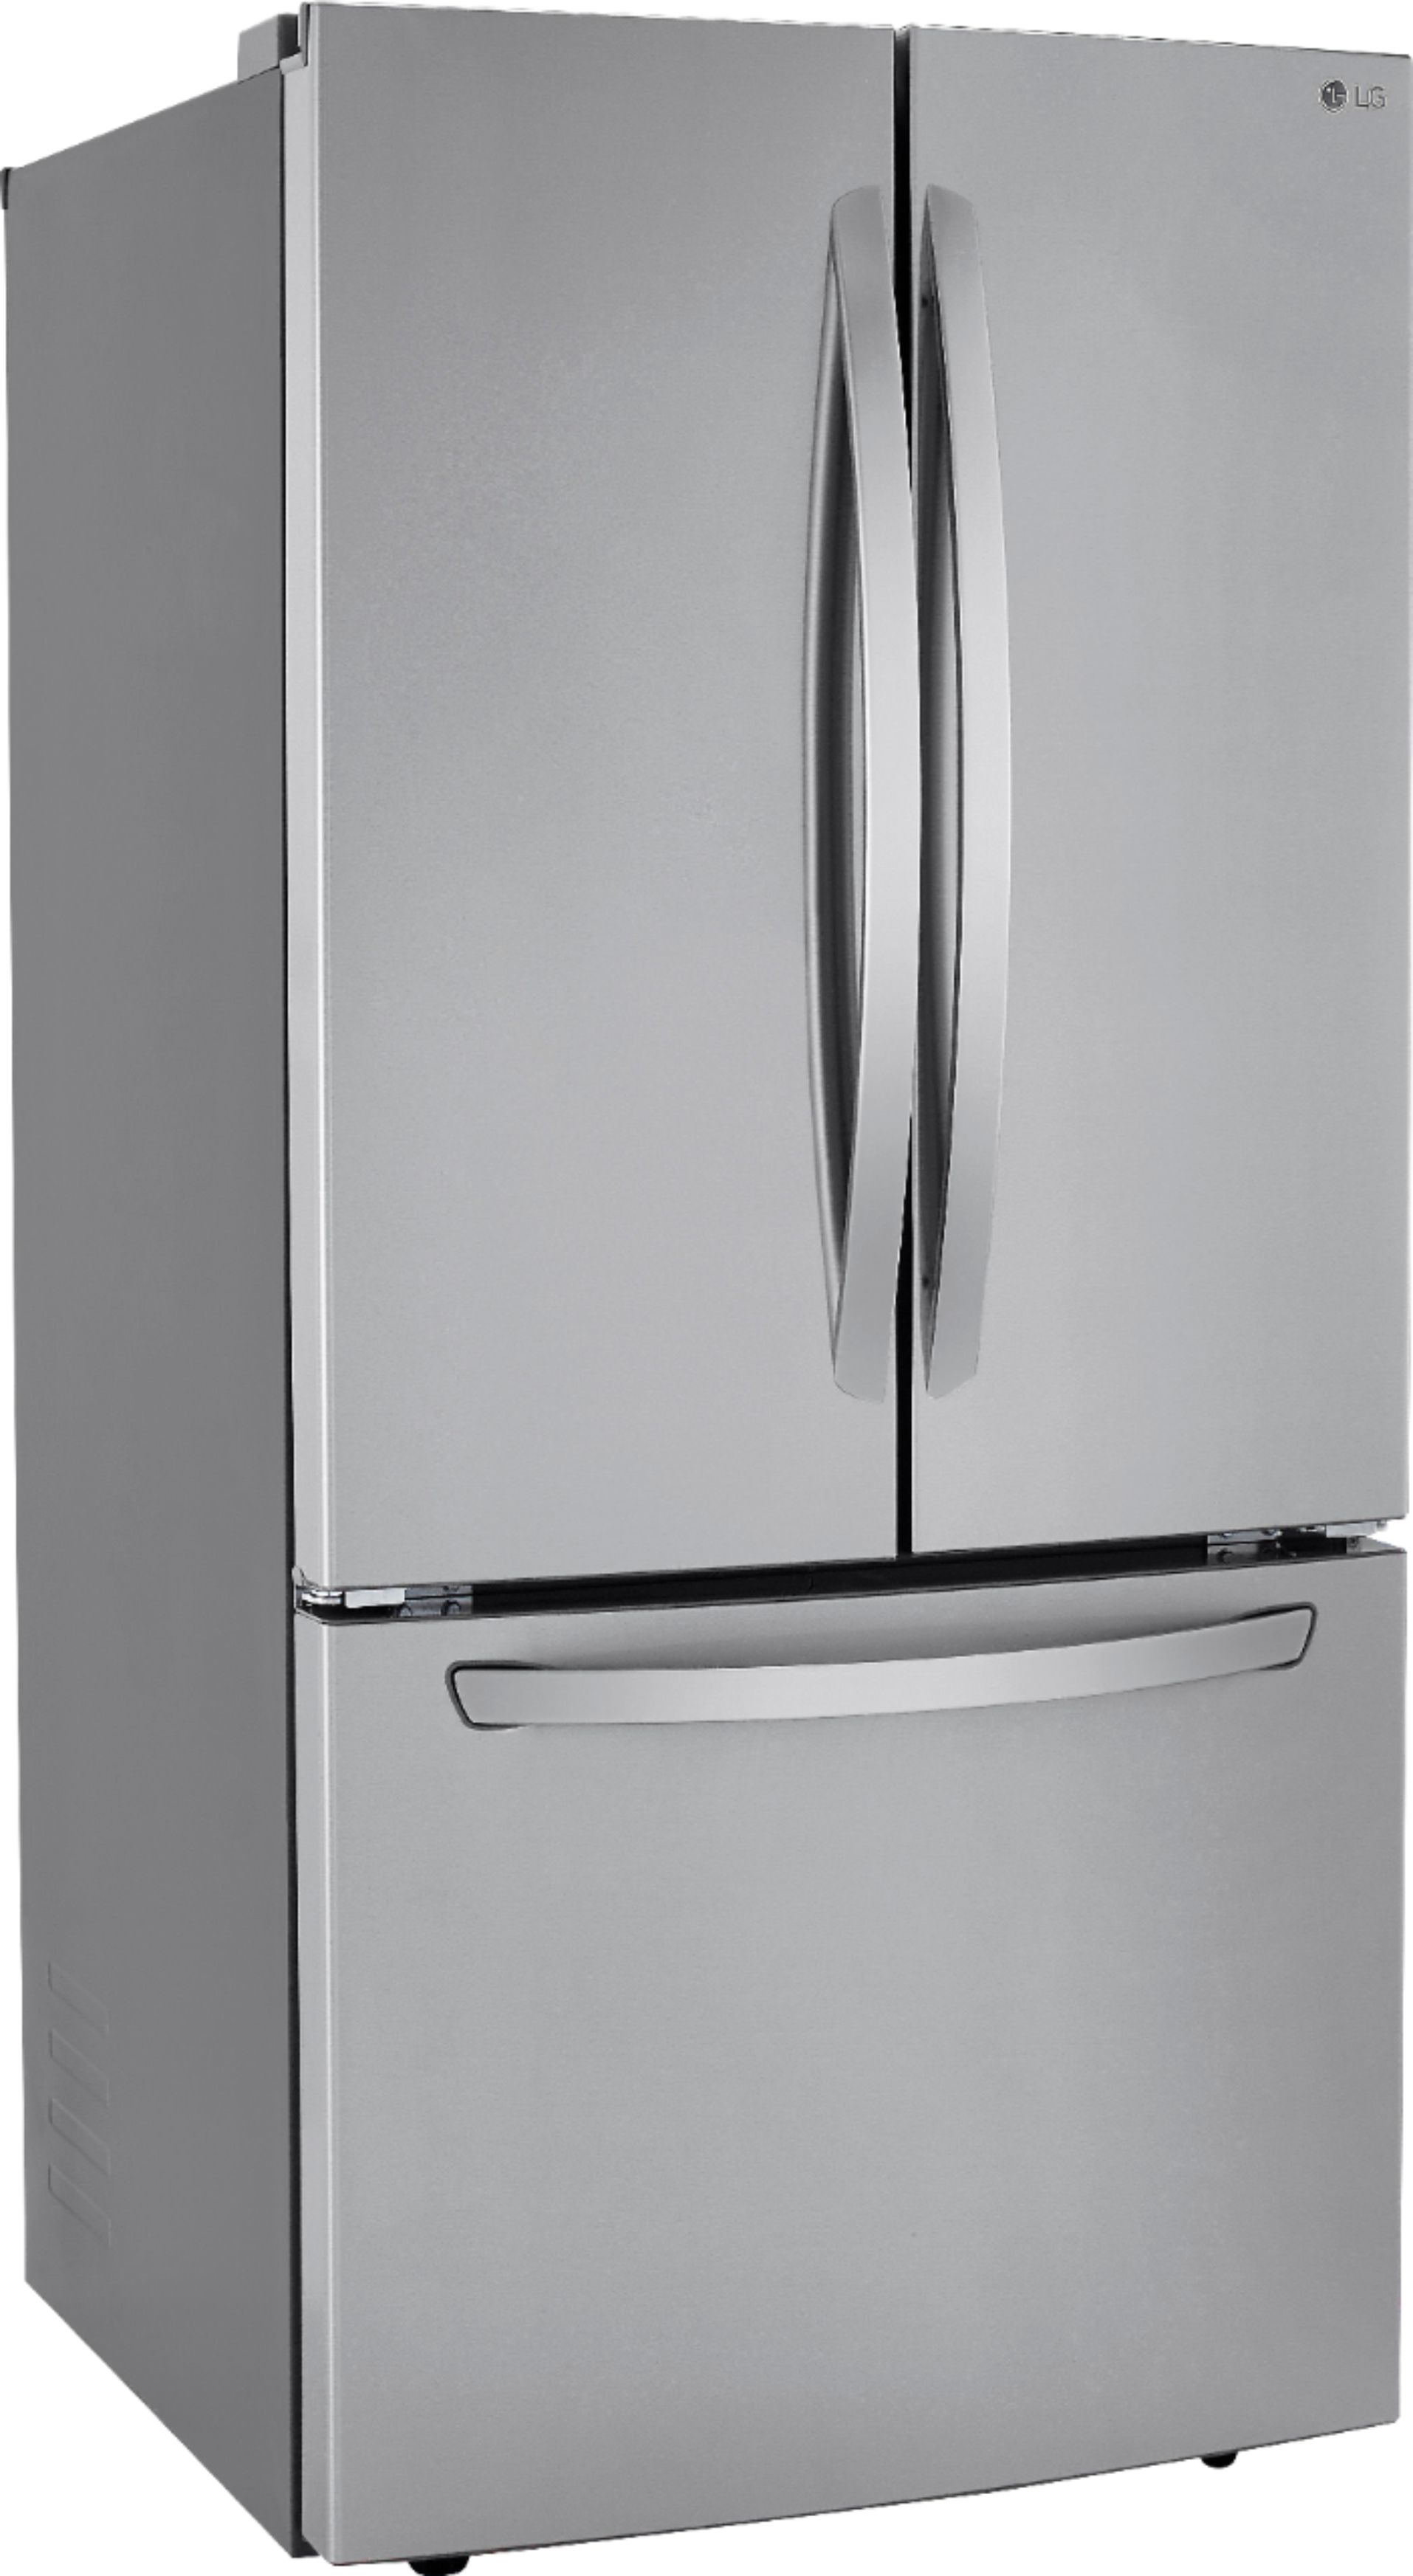 Best Buy Stainless Steel Refrigerator